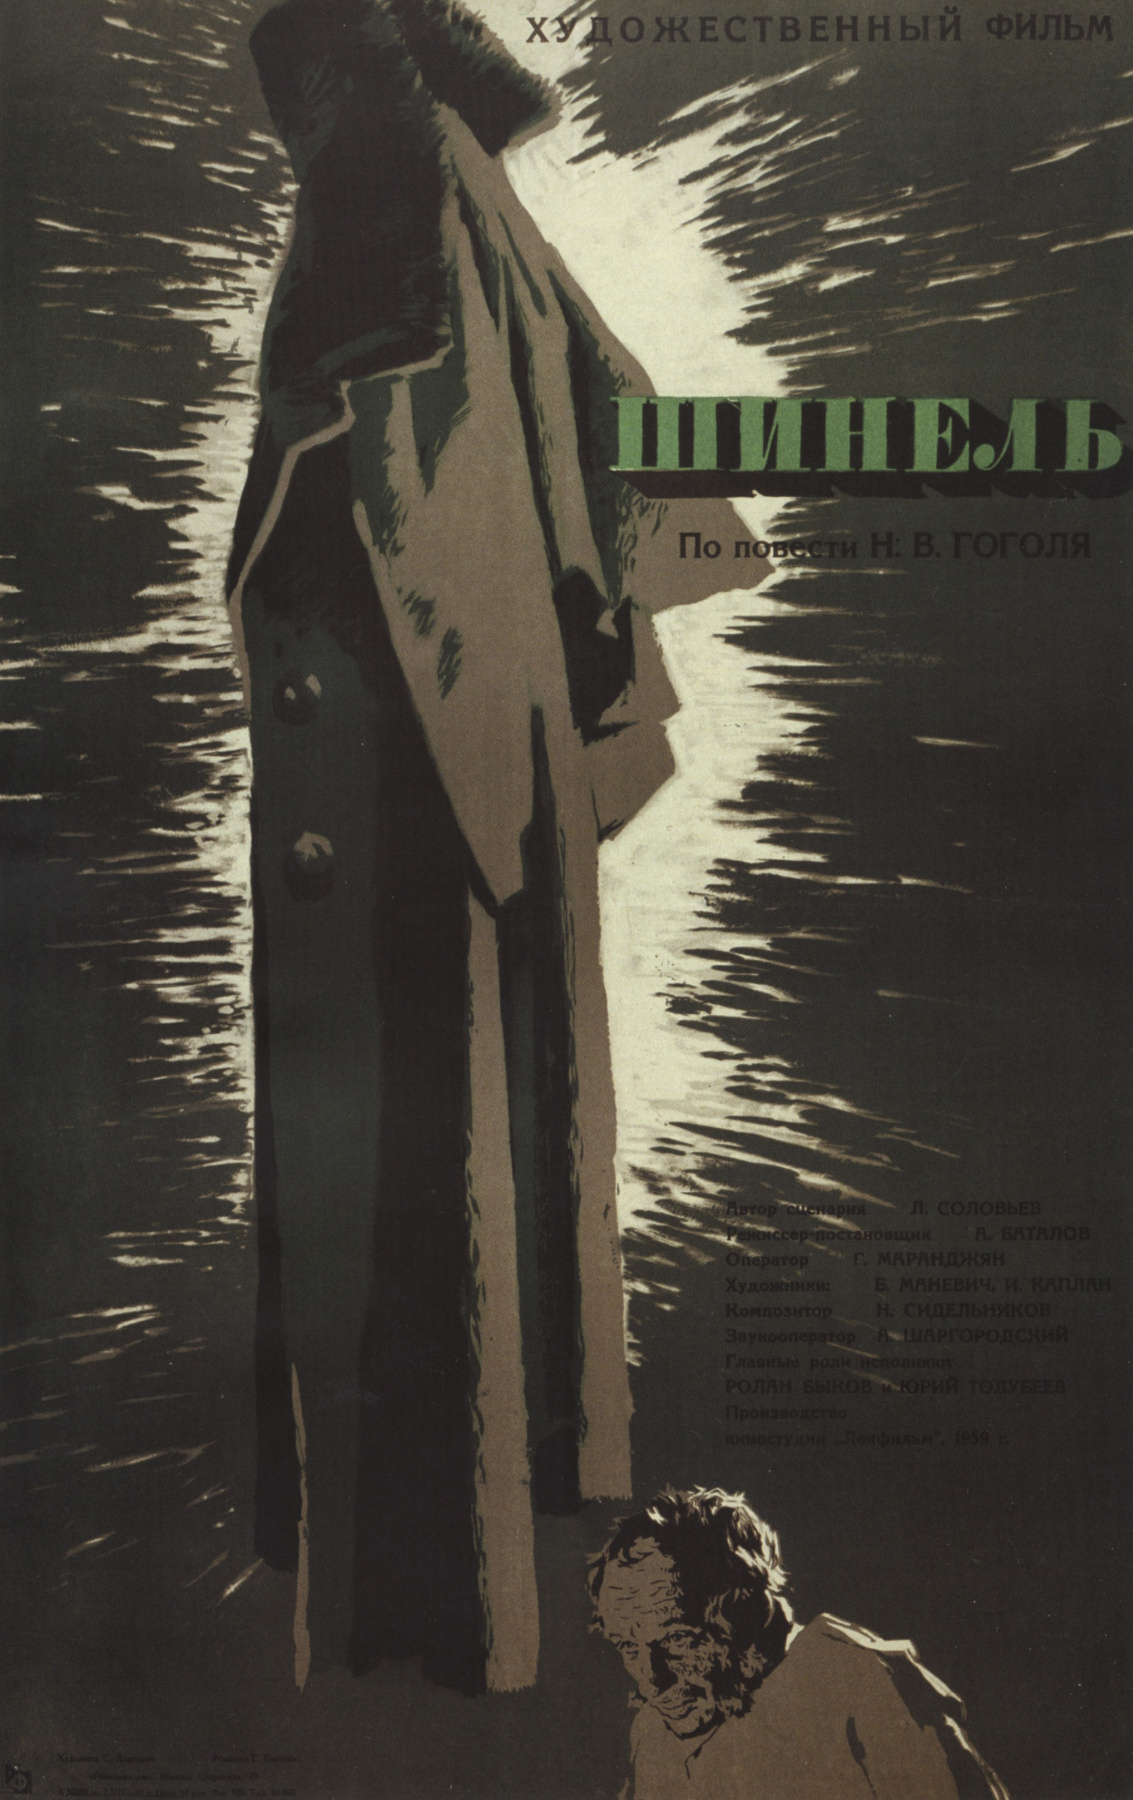 Sergei Ignatievich Datskevich. "The overcoat". Dir. A. Batalov